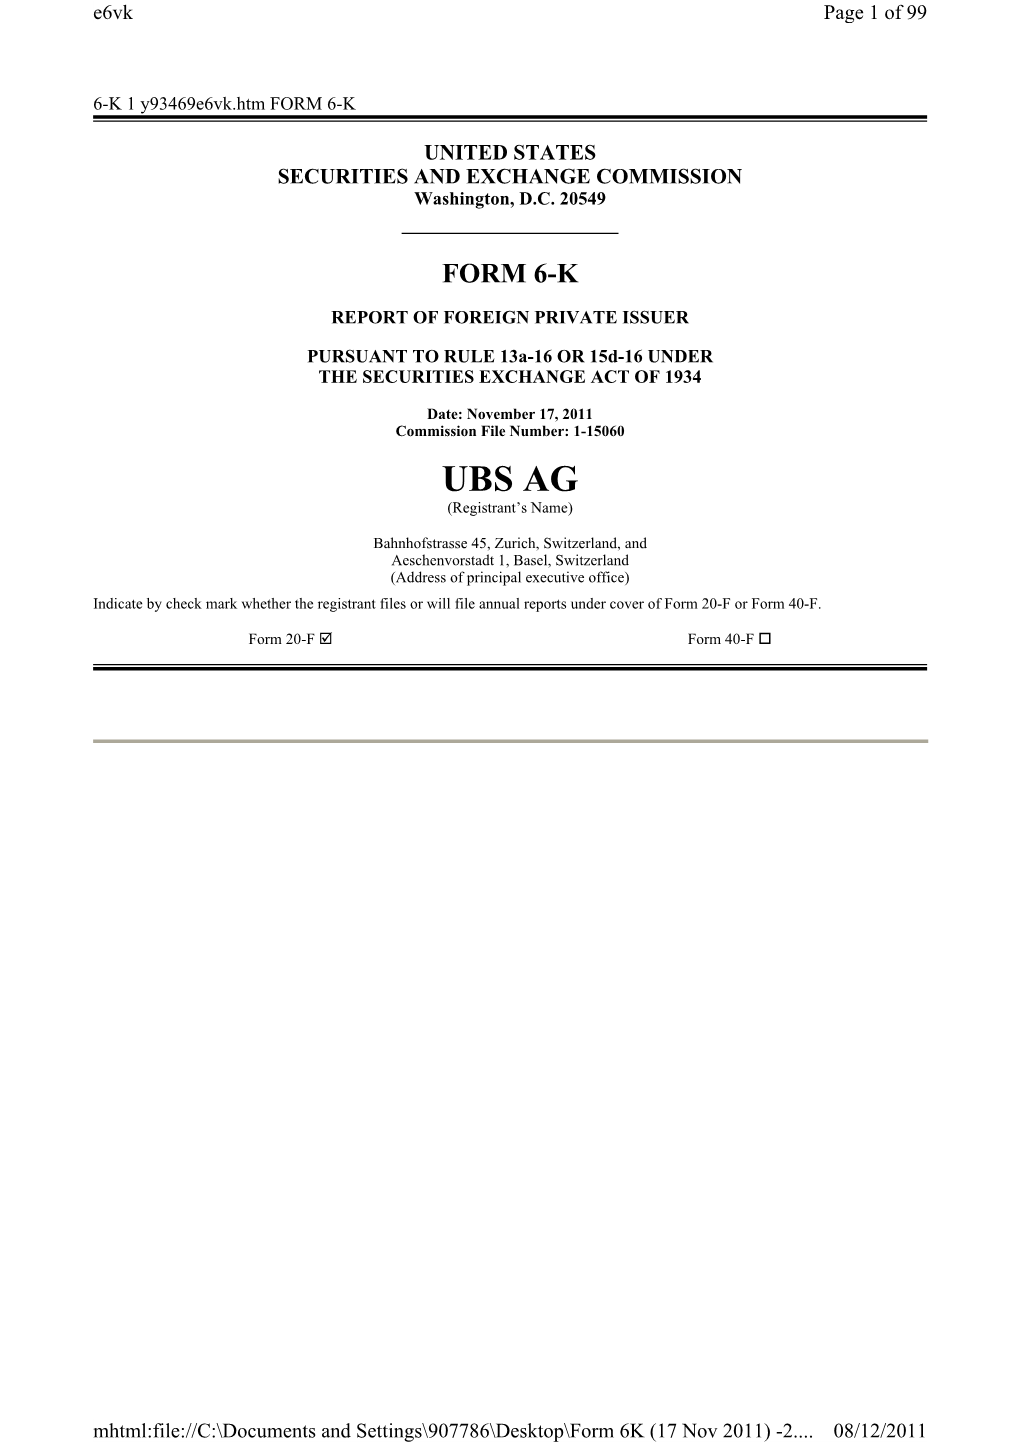 UBS AG (Registrant’S Name)